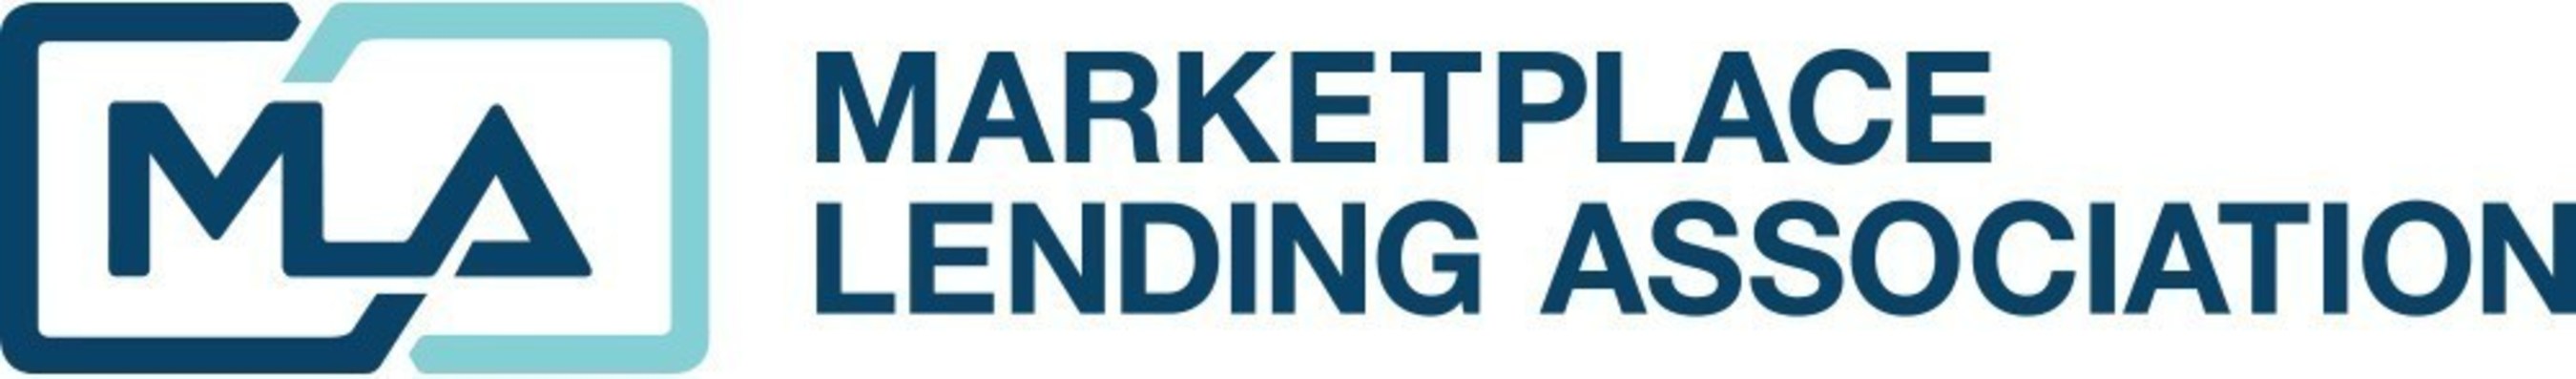 Marketplace Lending Association